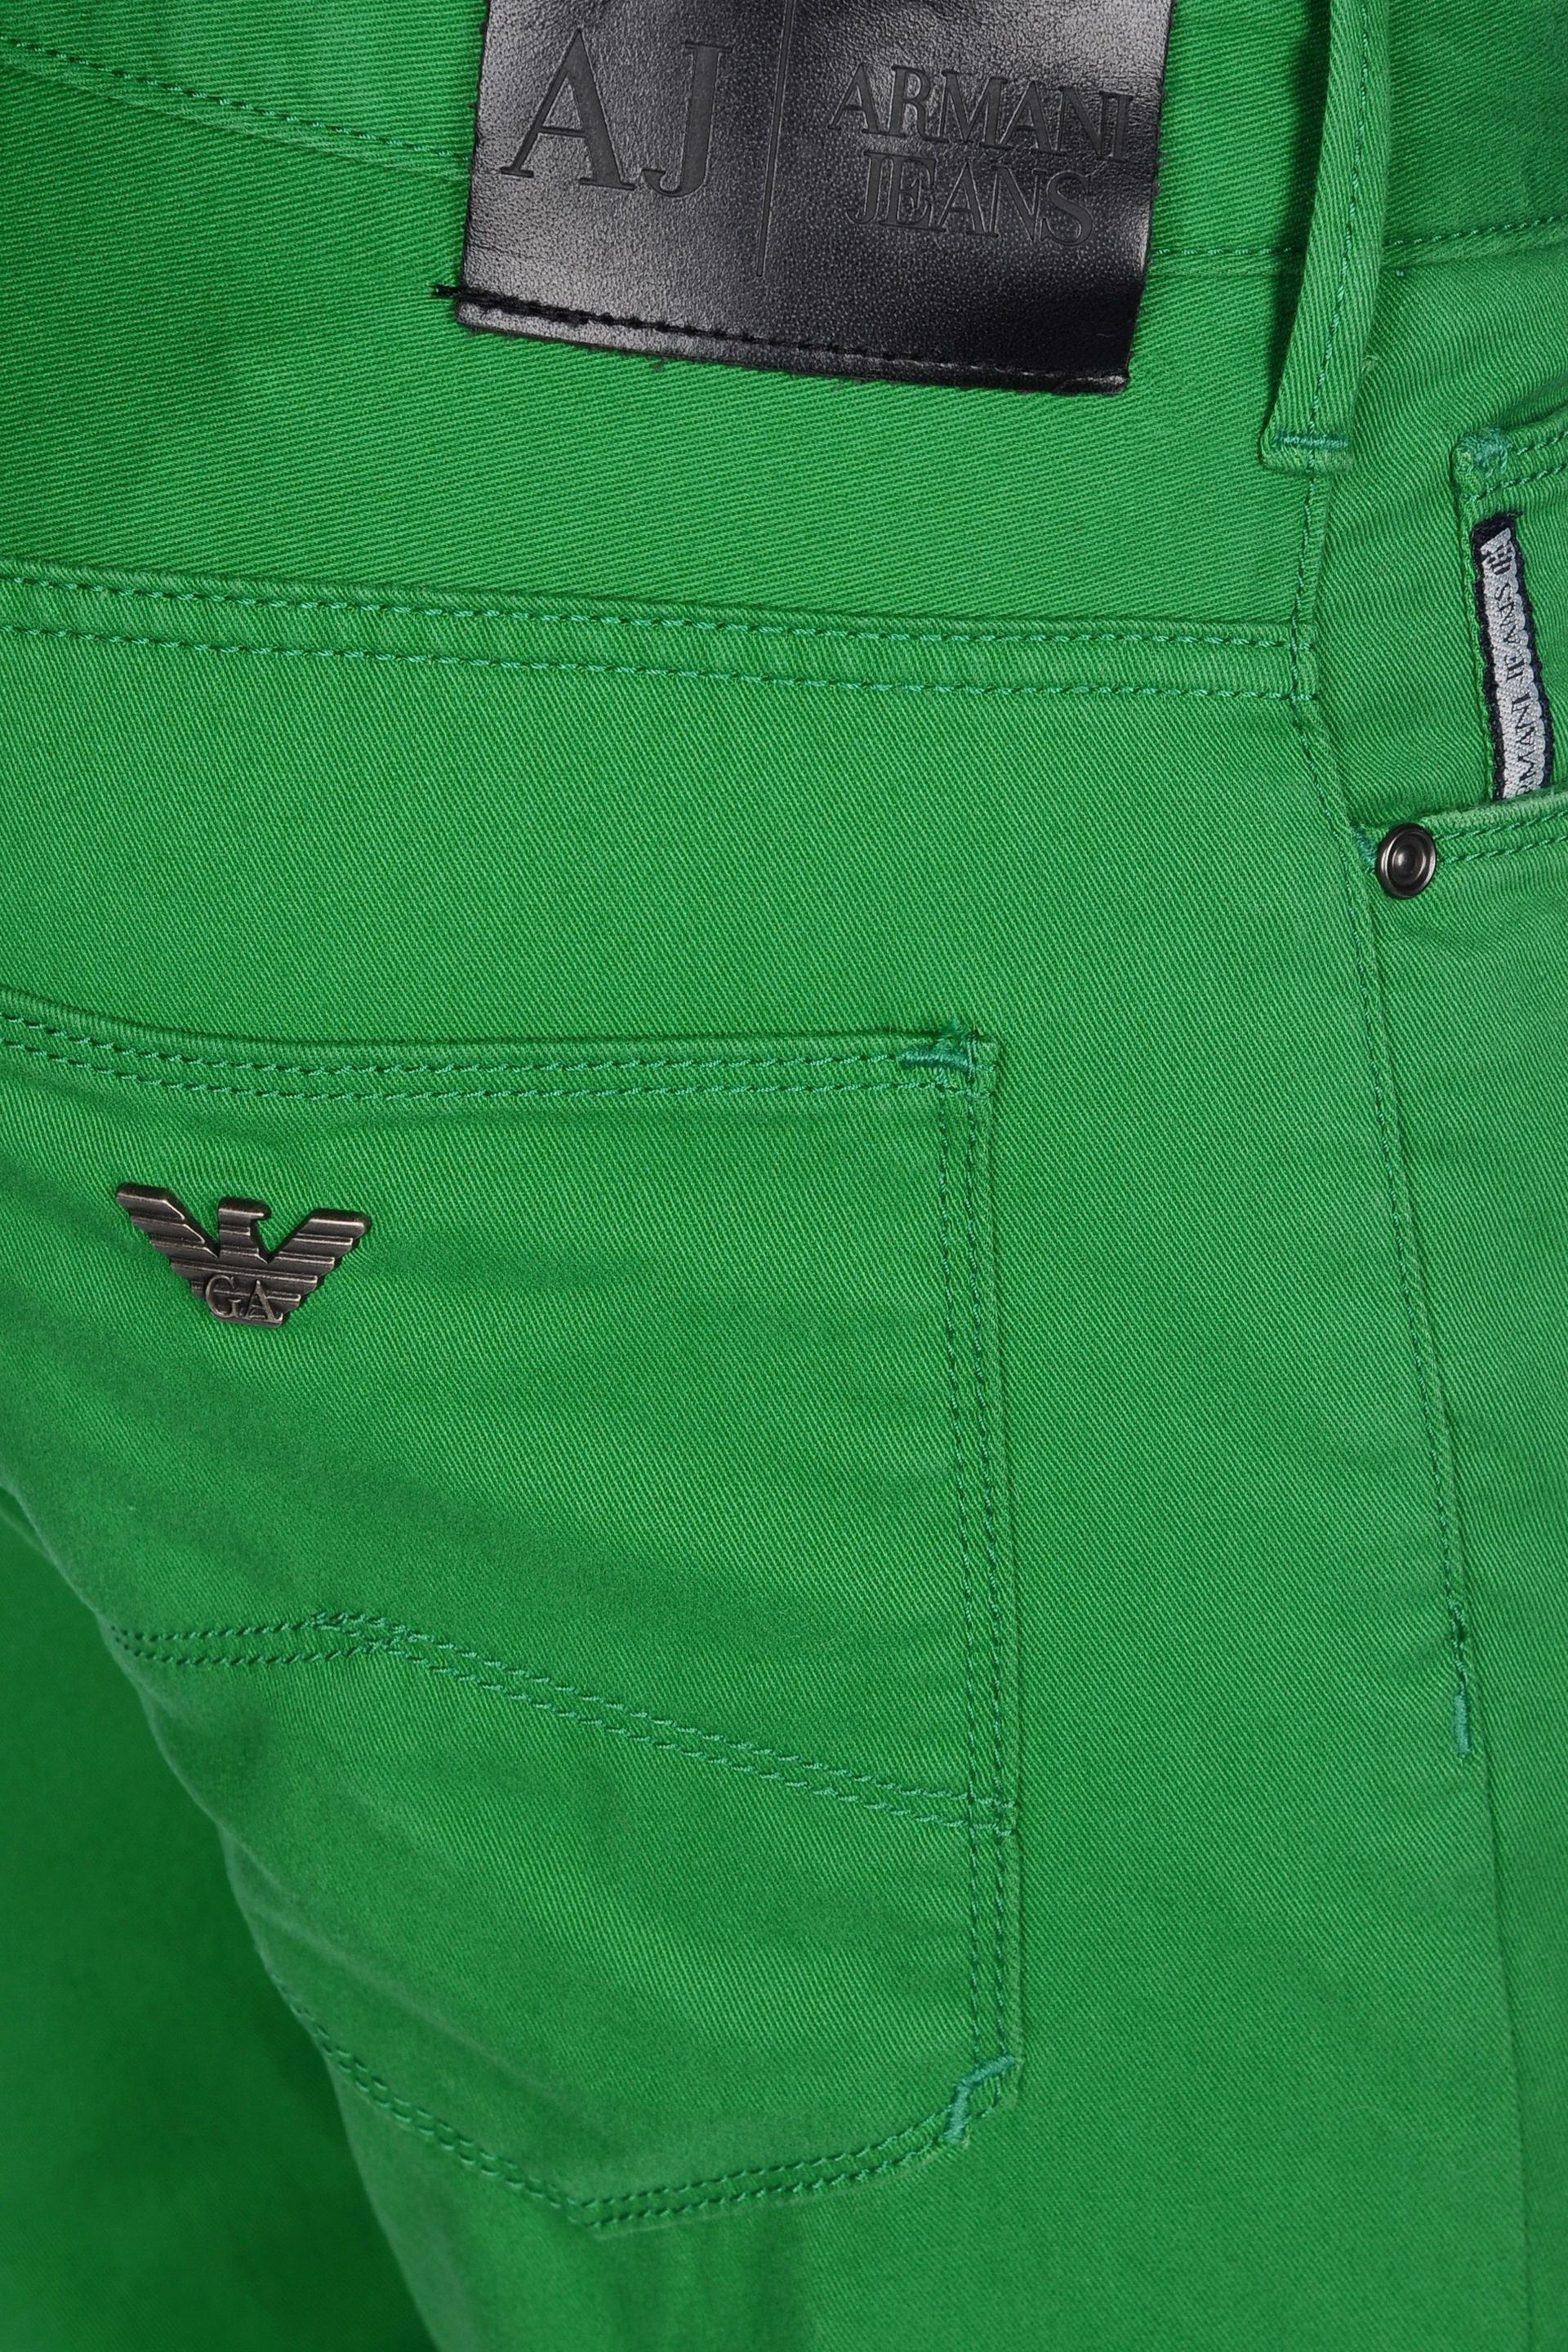 green armani jeans